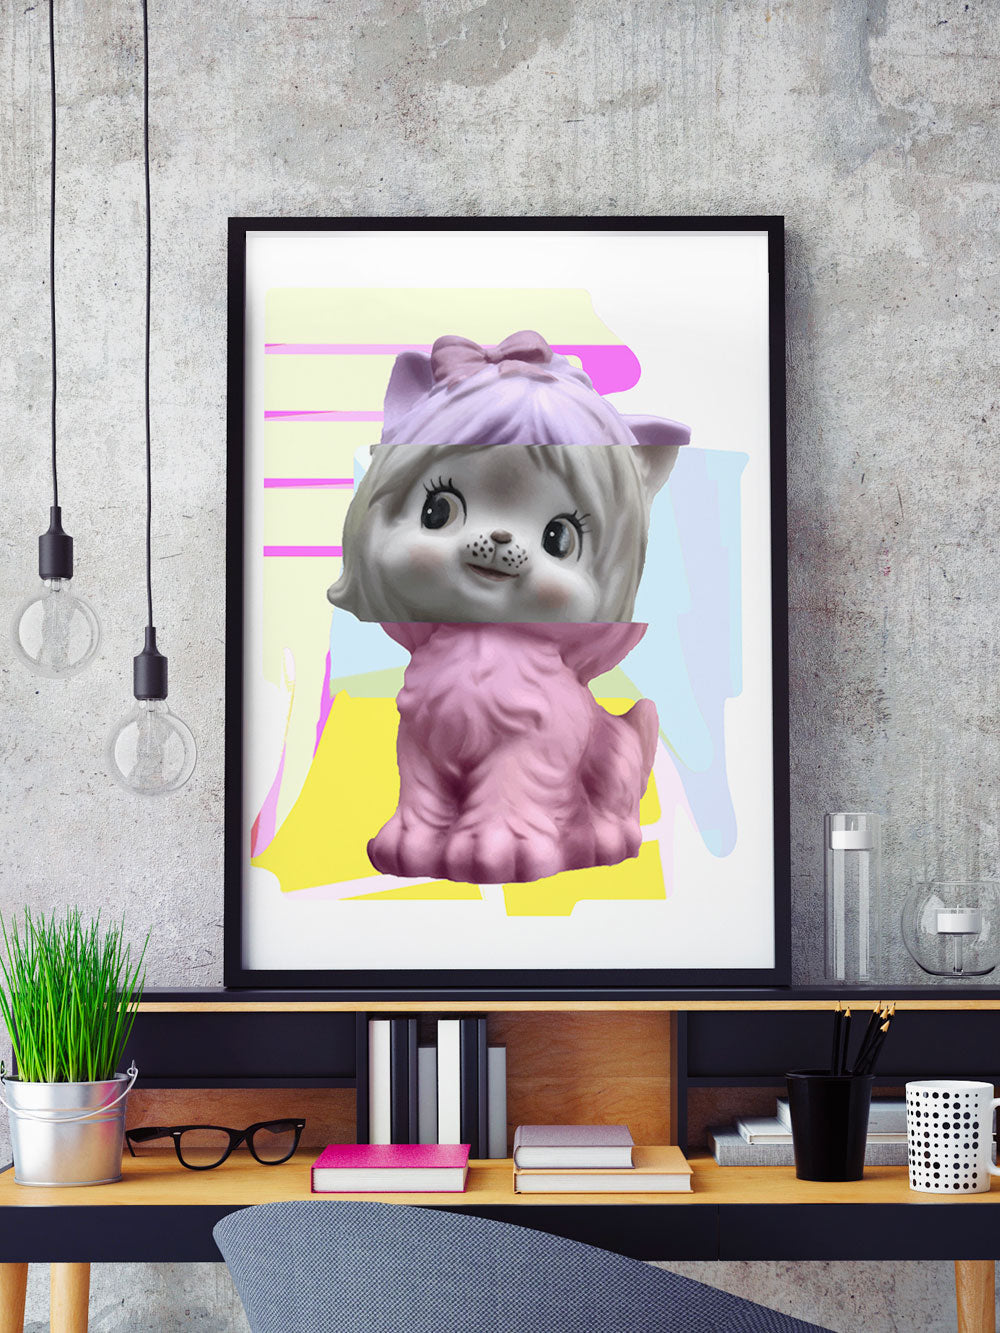 Kitty Splice 2 Glitch Print in a frame on a shelf